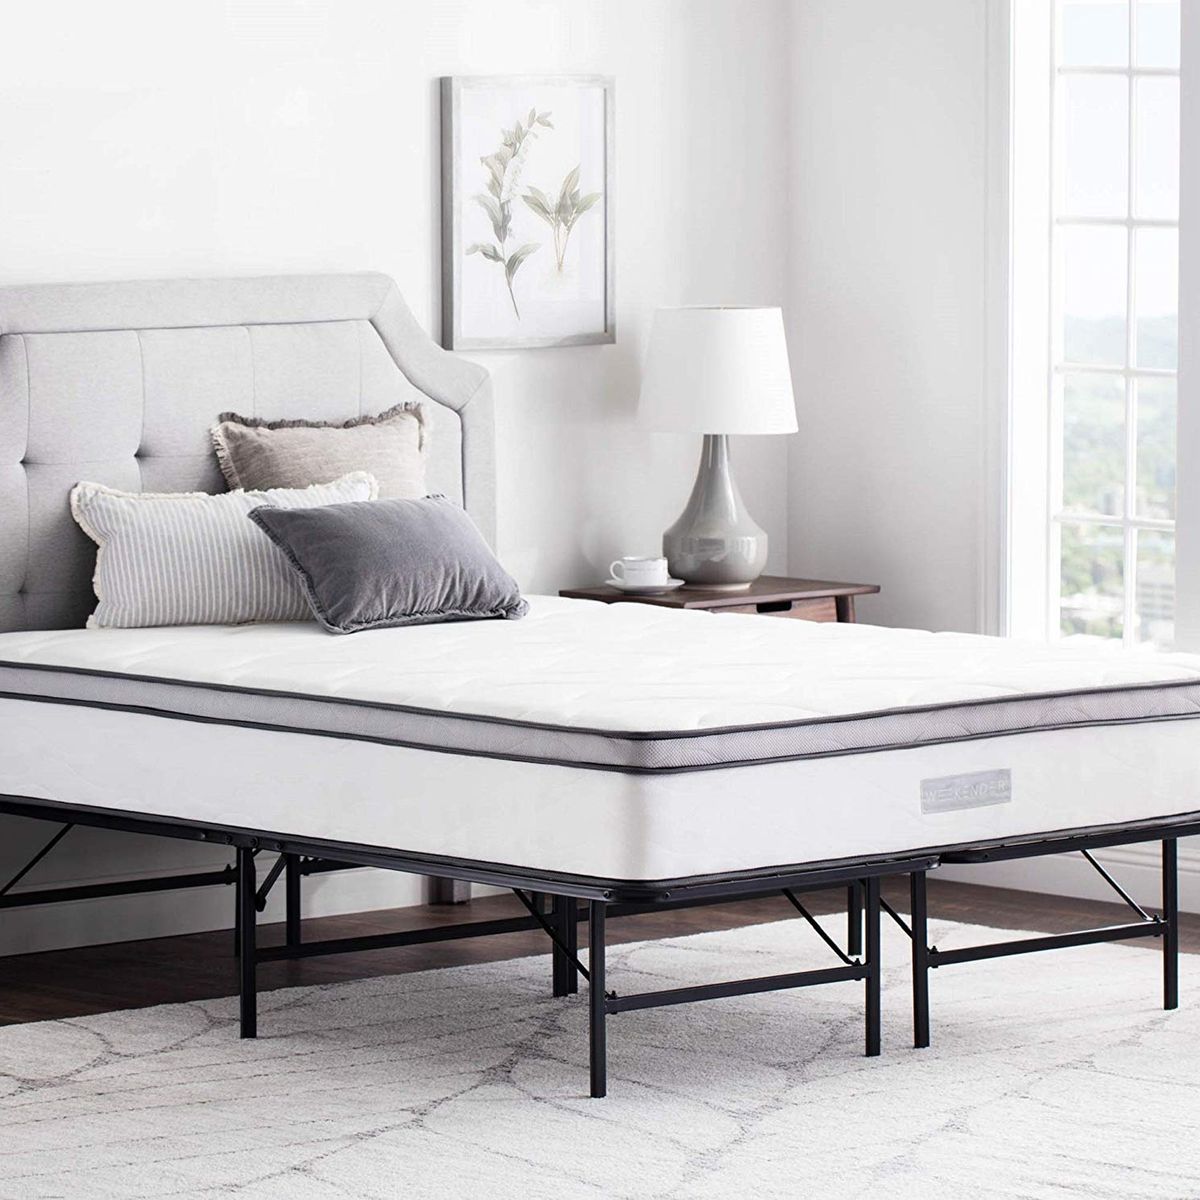 19 Best Metal Bed Frames 2020 The, 18 Inch Metal Bed Frame